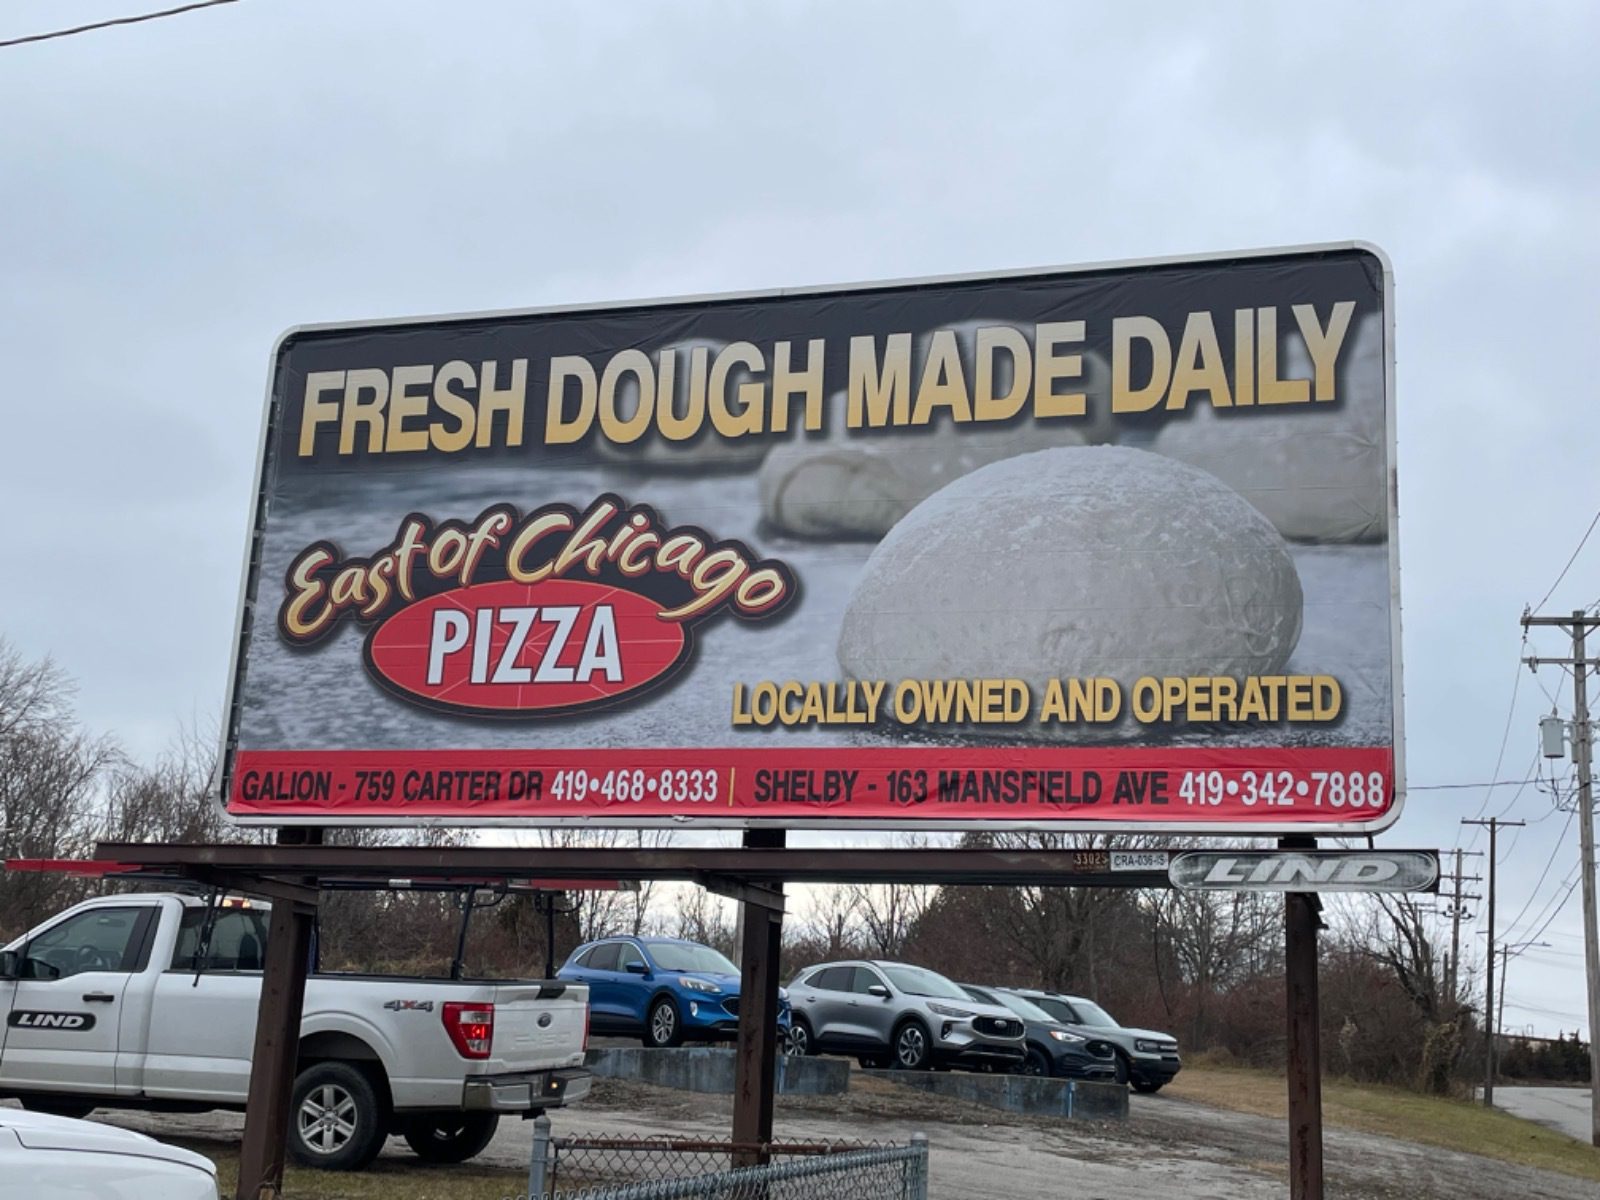 East of Chicago billboard, pizza billboard